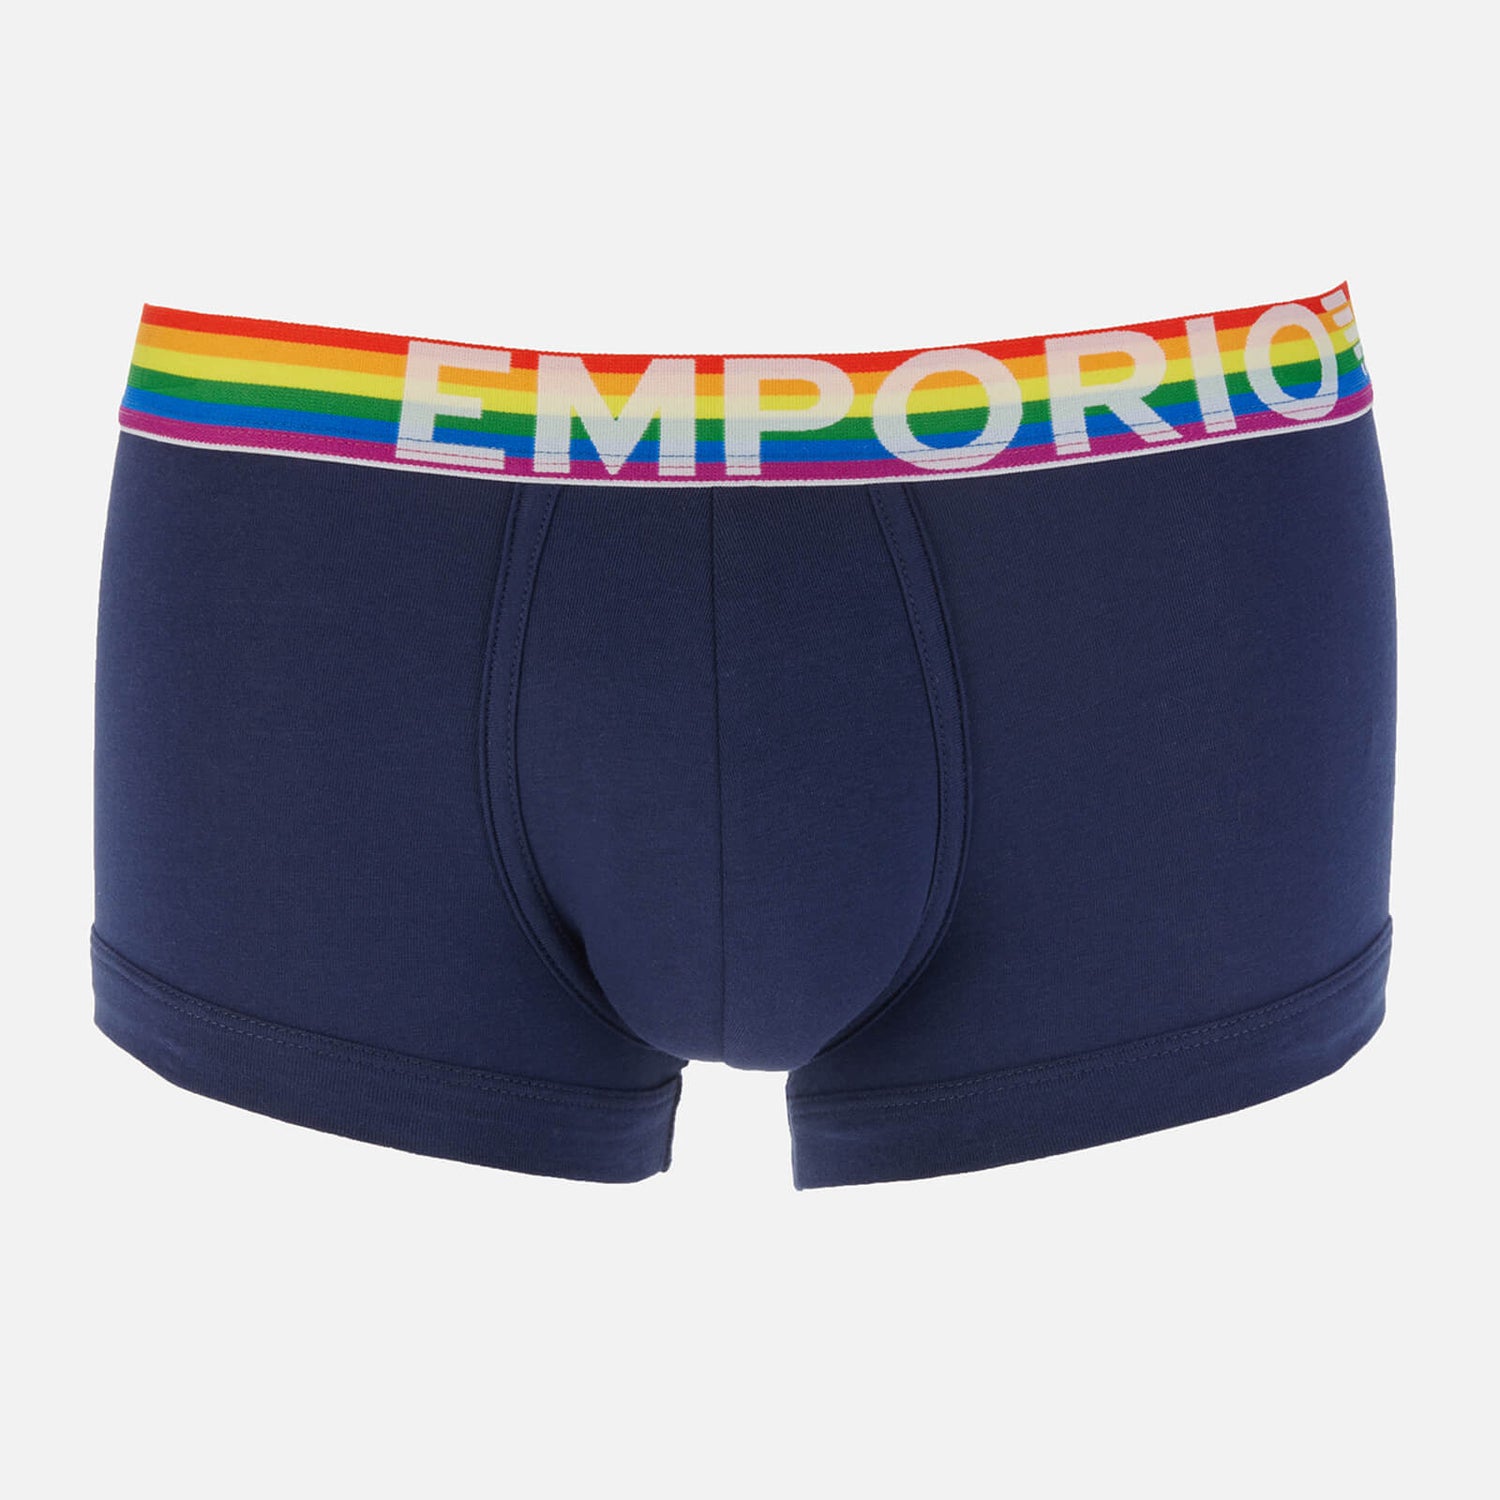 Emporio Armani Men's Rainbow Trunks - Patriot Blue - S